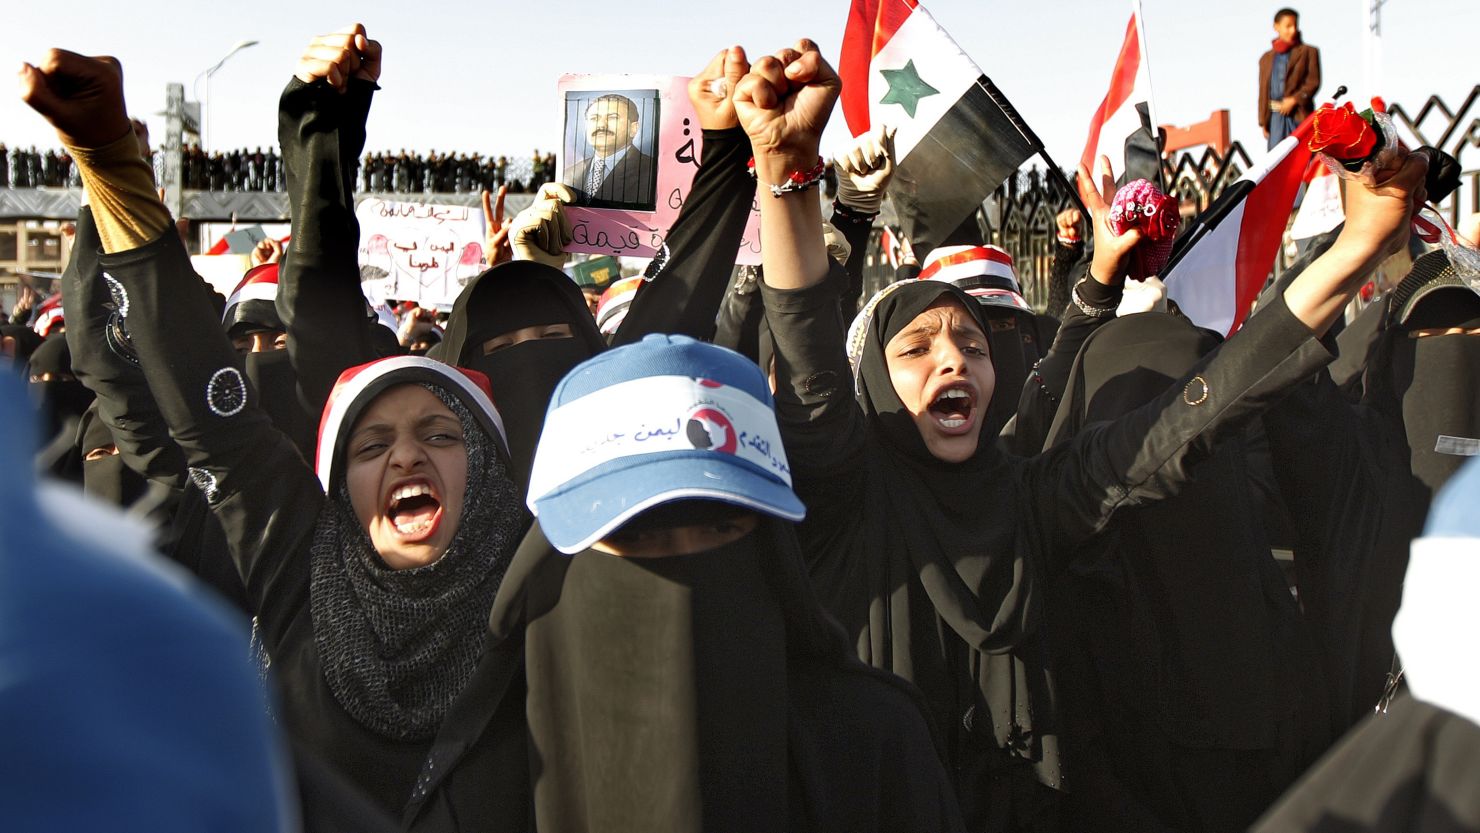 Yemeni women chant slogans at a pro-democracy demonstration in Sanaa, Yemen,  in October 2011.